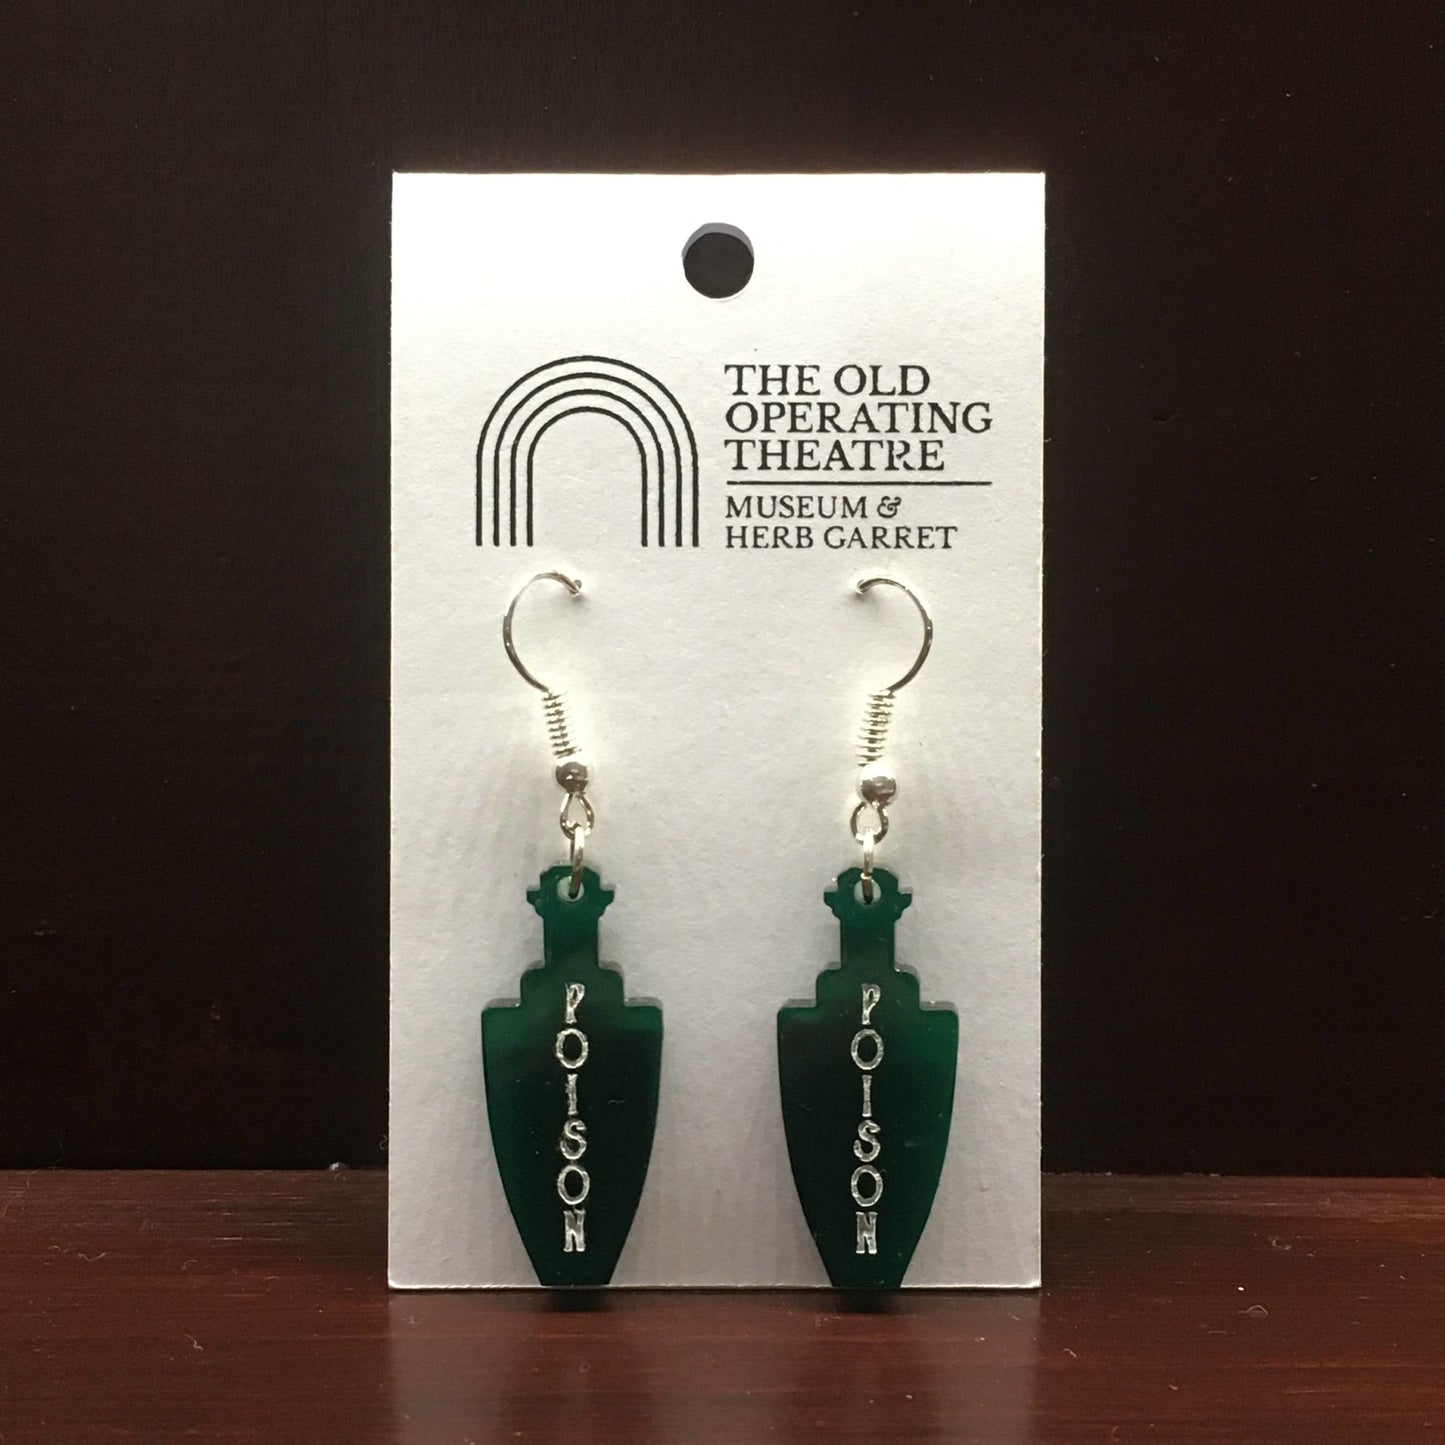 Pair of green dangle earrings in the shape of a bottle. 'Poison' is written vertically on the bottle.